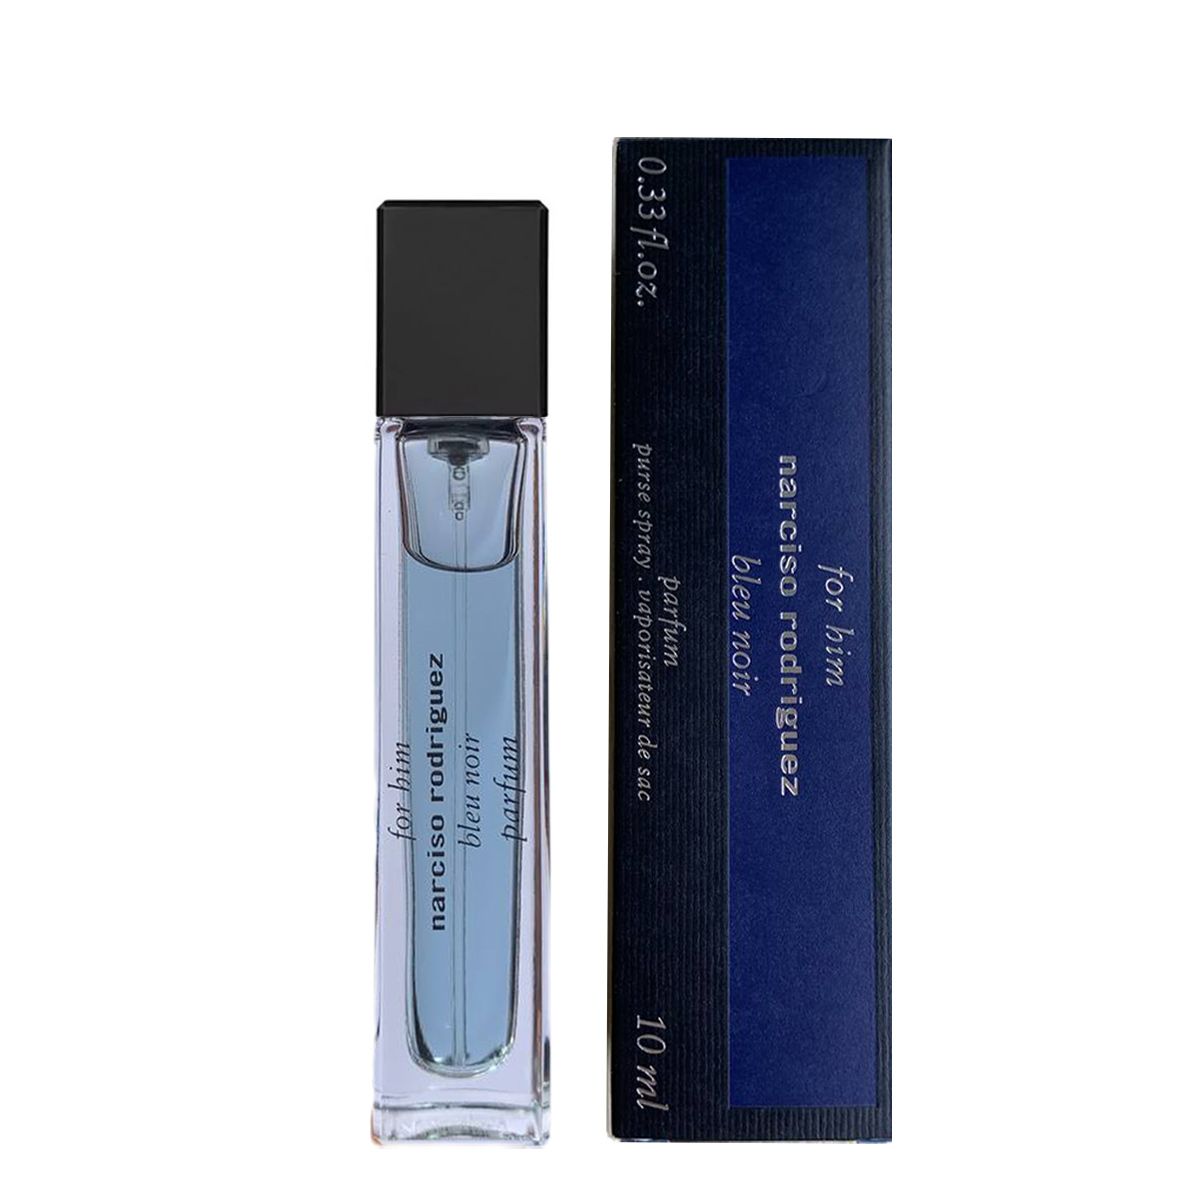  Narciso Rodriguez For Him Bleu Noir Parfum Travel Spray 